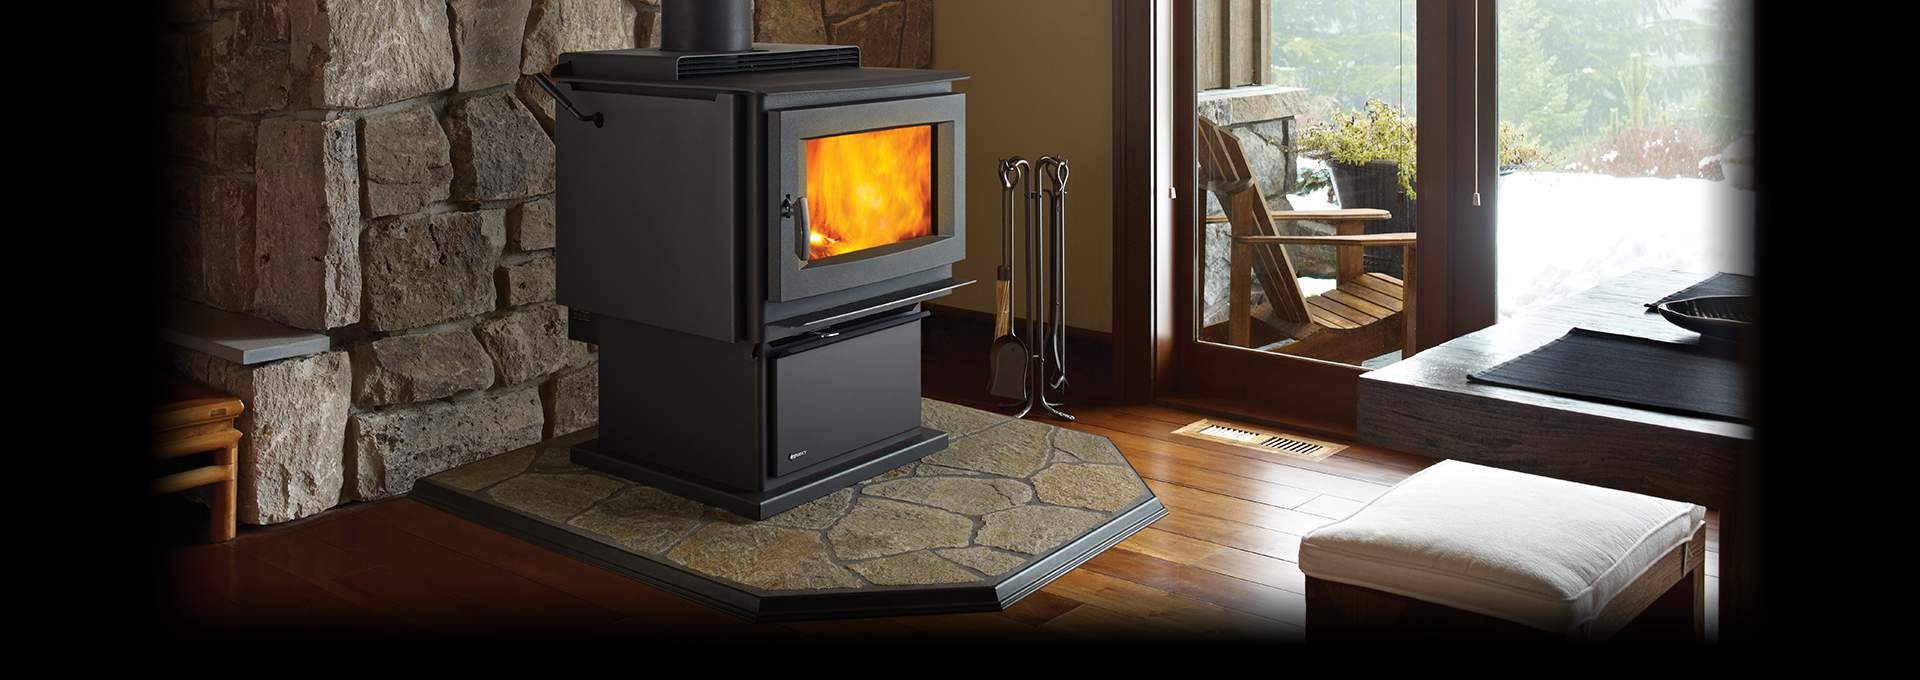 Wood Stove Fireplace Elegant 26 Re Mended Hardwood Floor Fireplace Transition